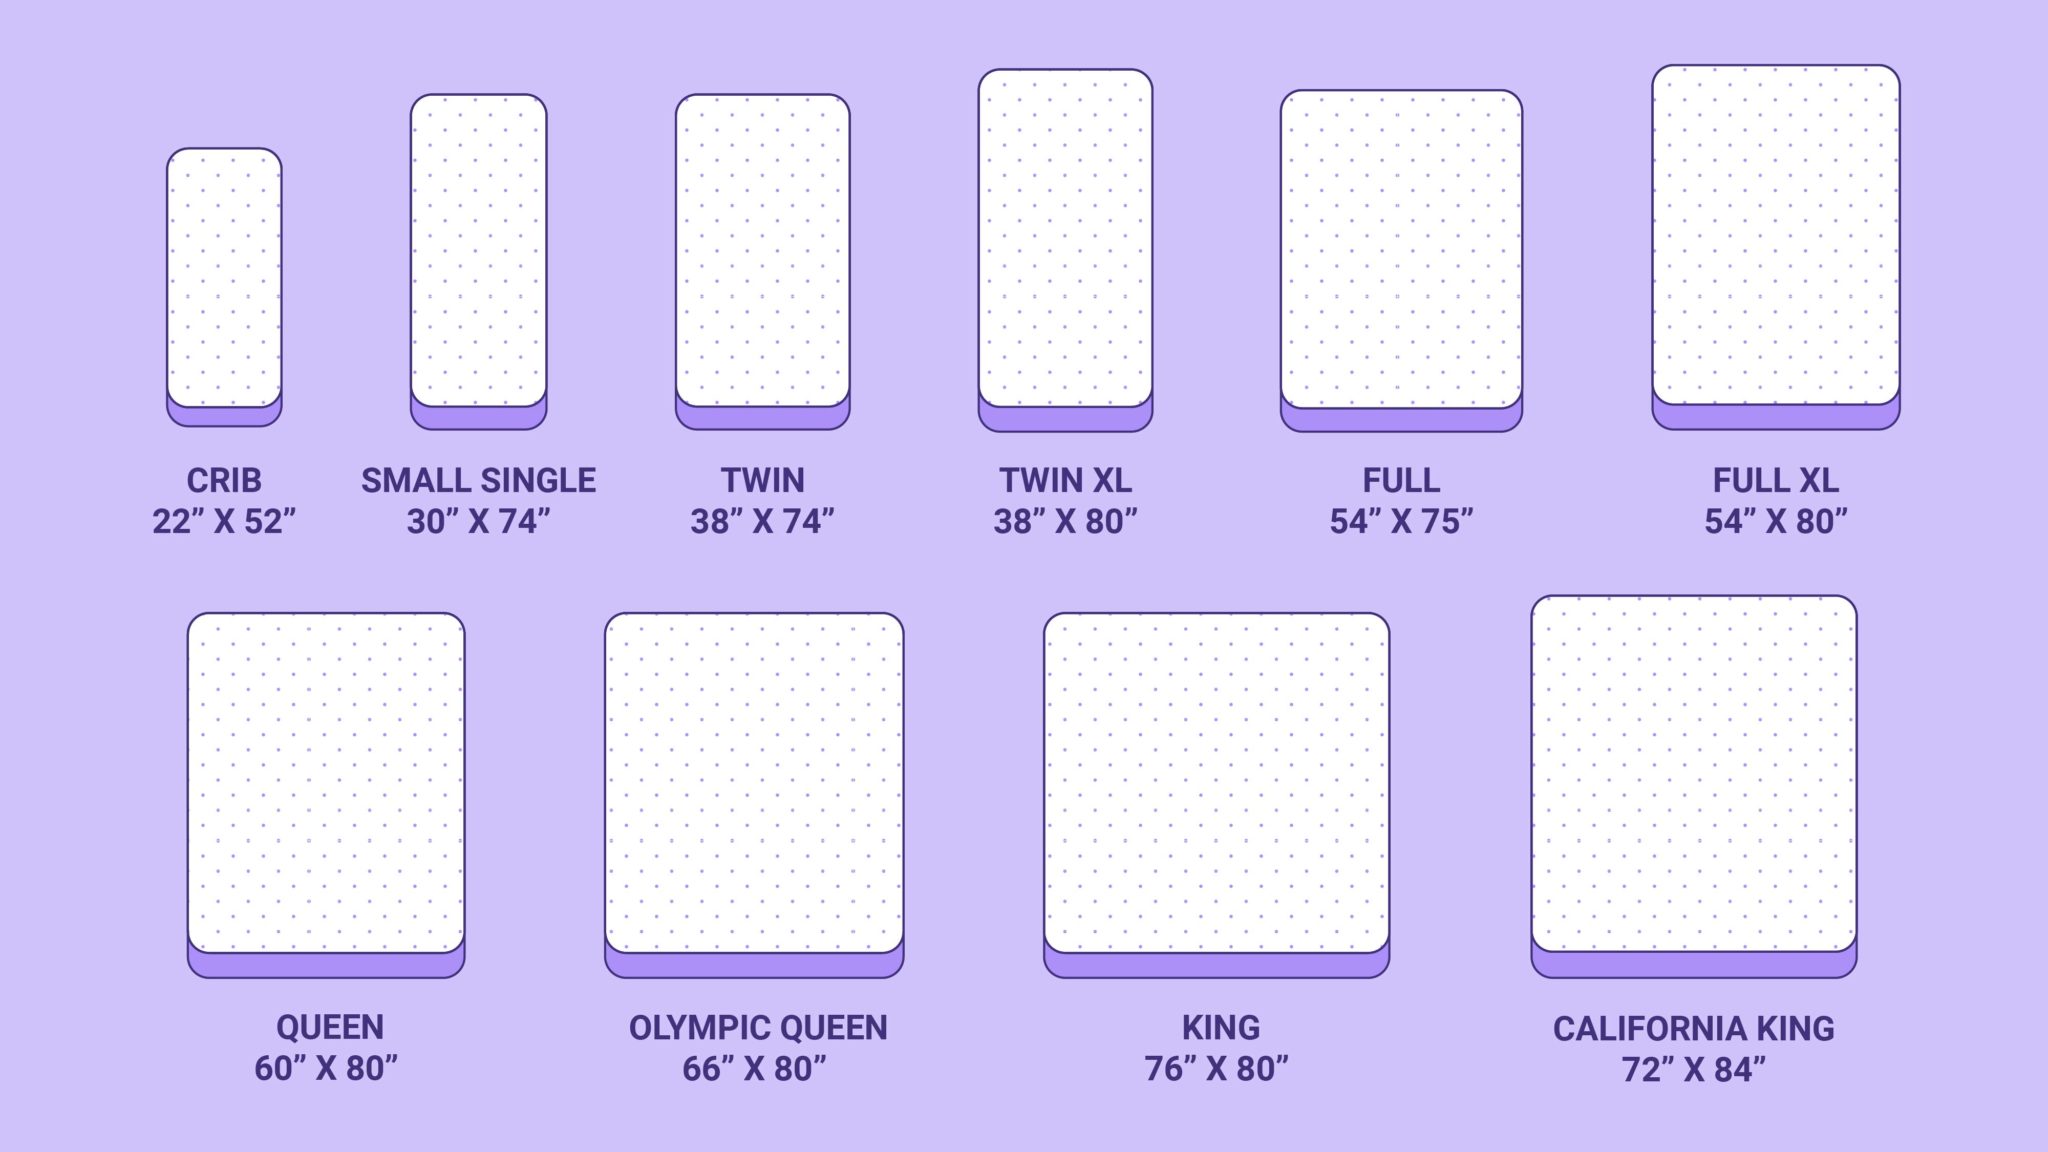 ikea king size mattress sizes dimensions